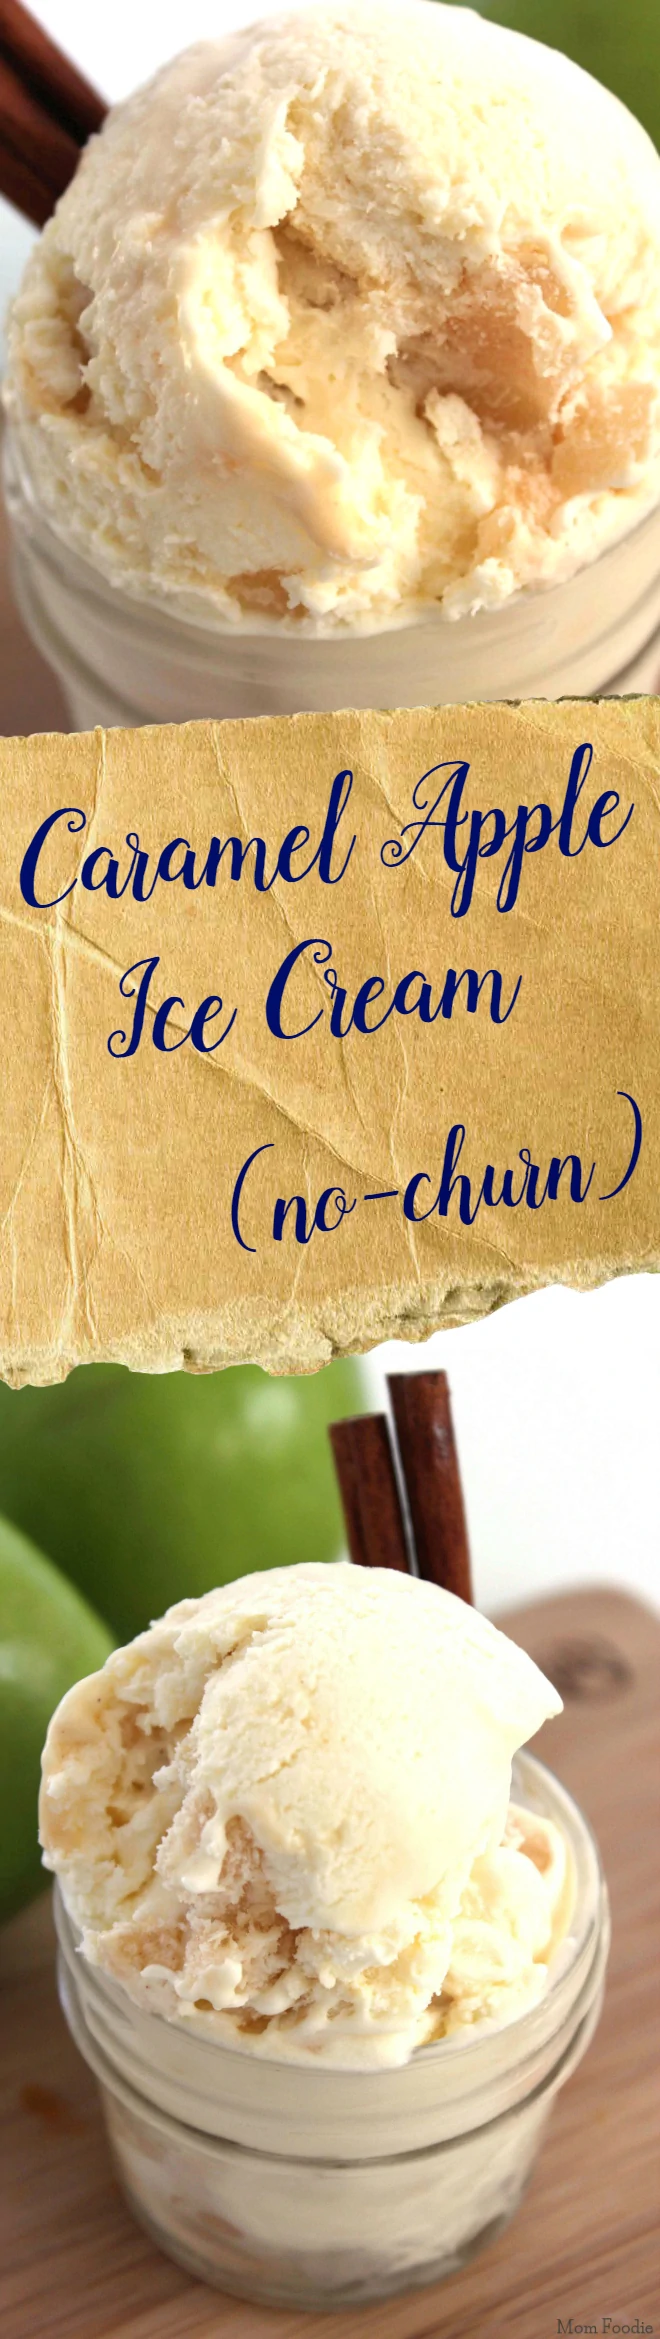 Caramel Apple Ice Cream no churn recipe